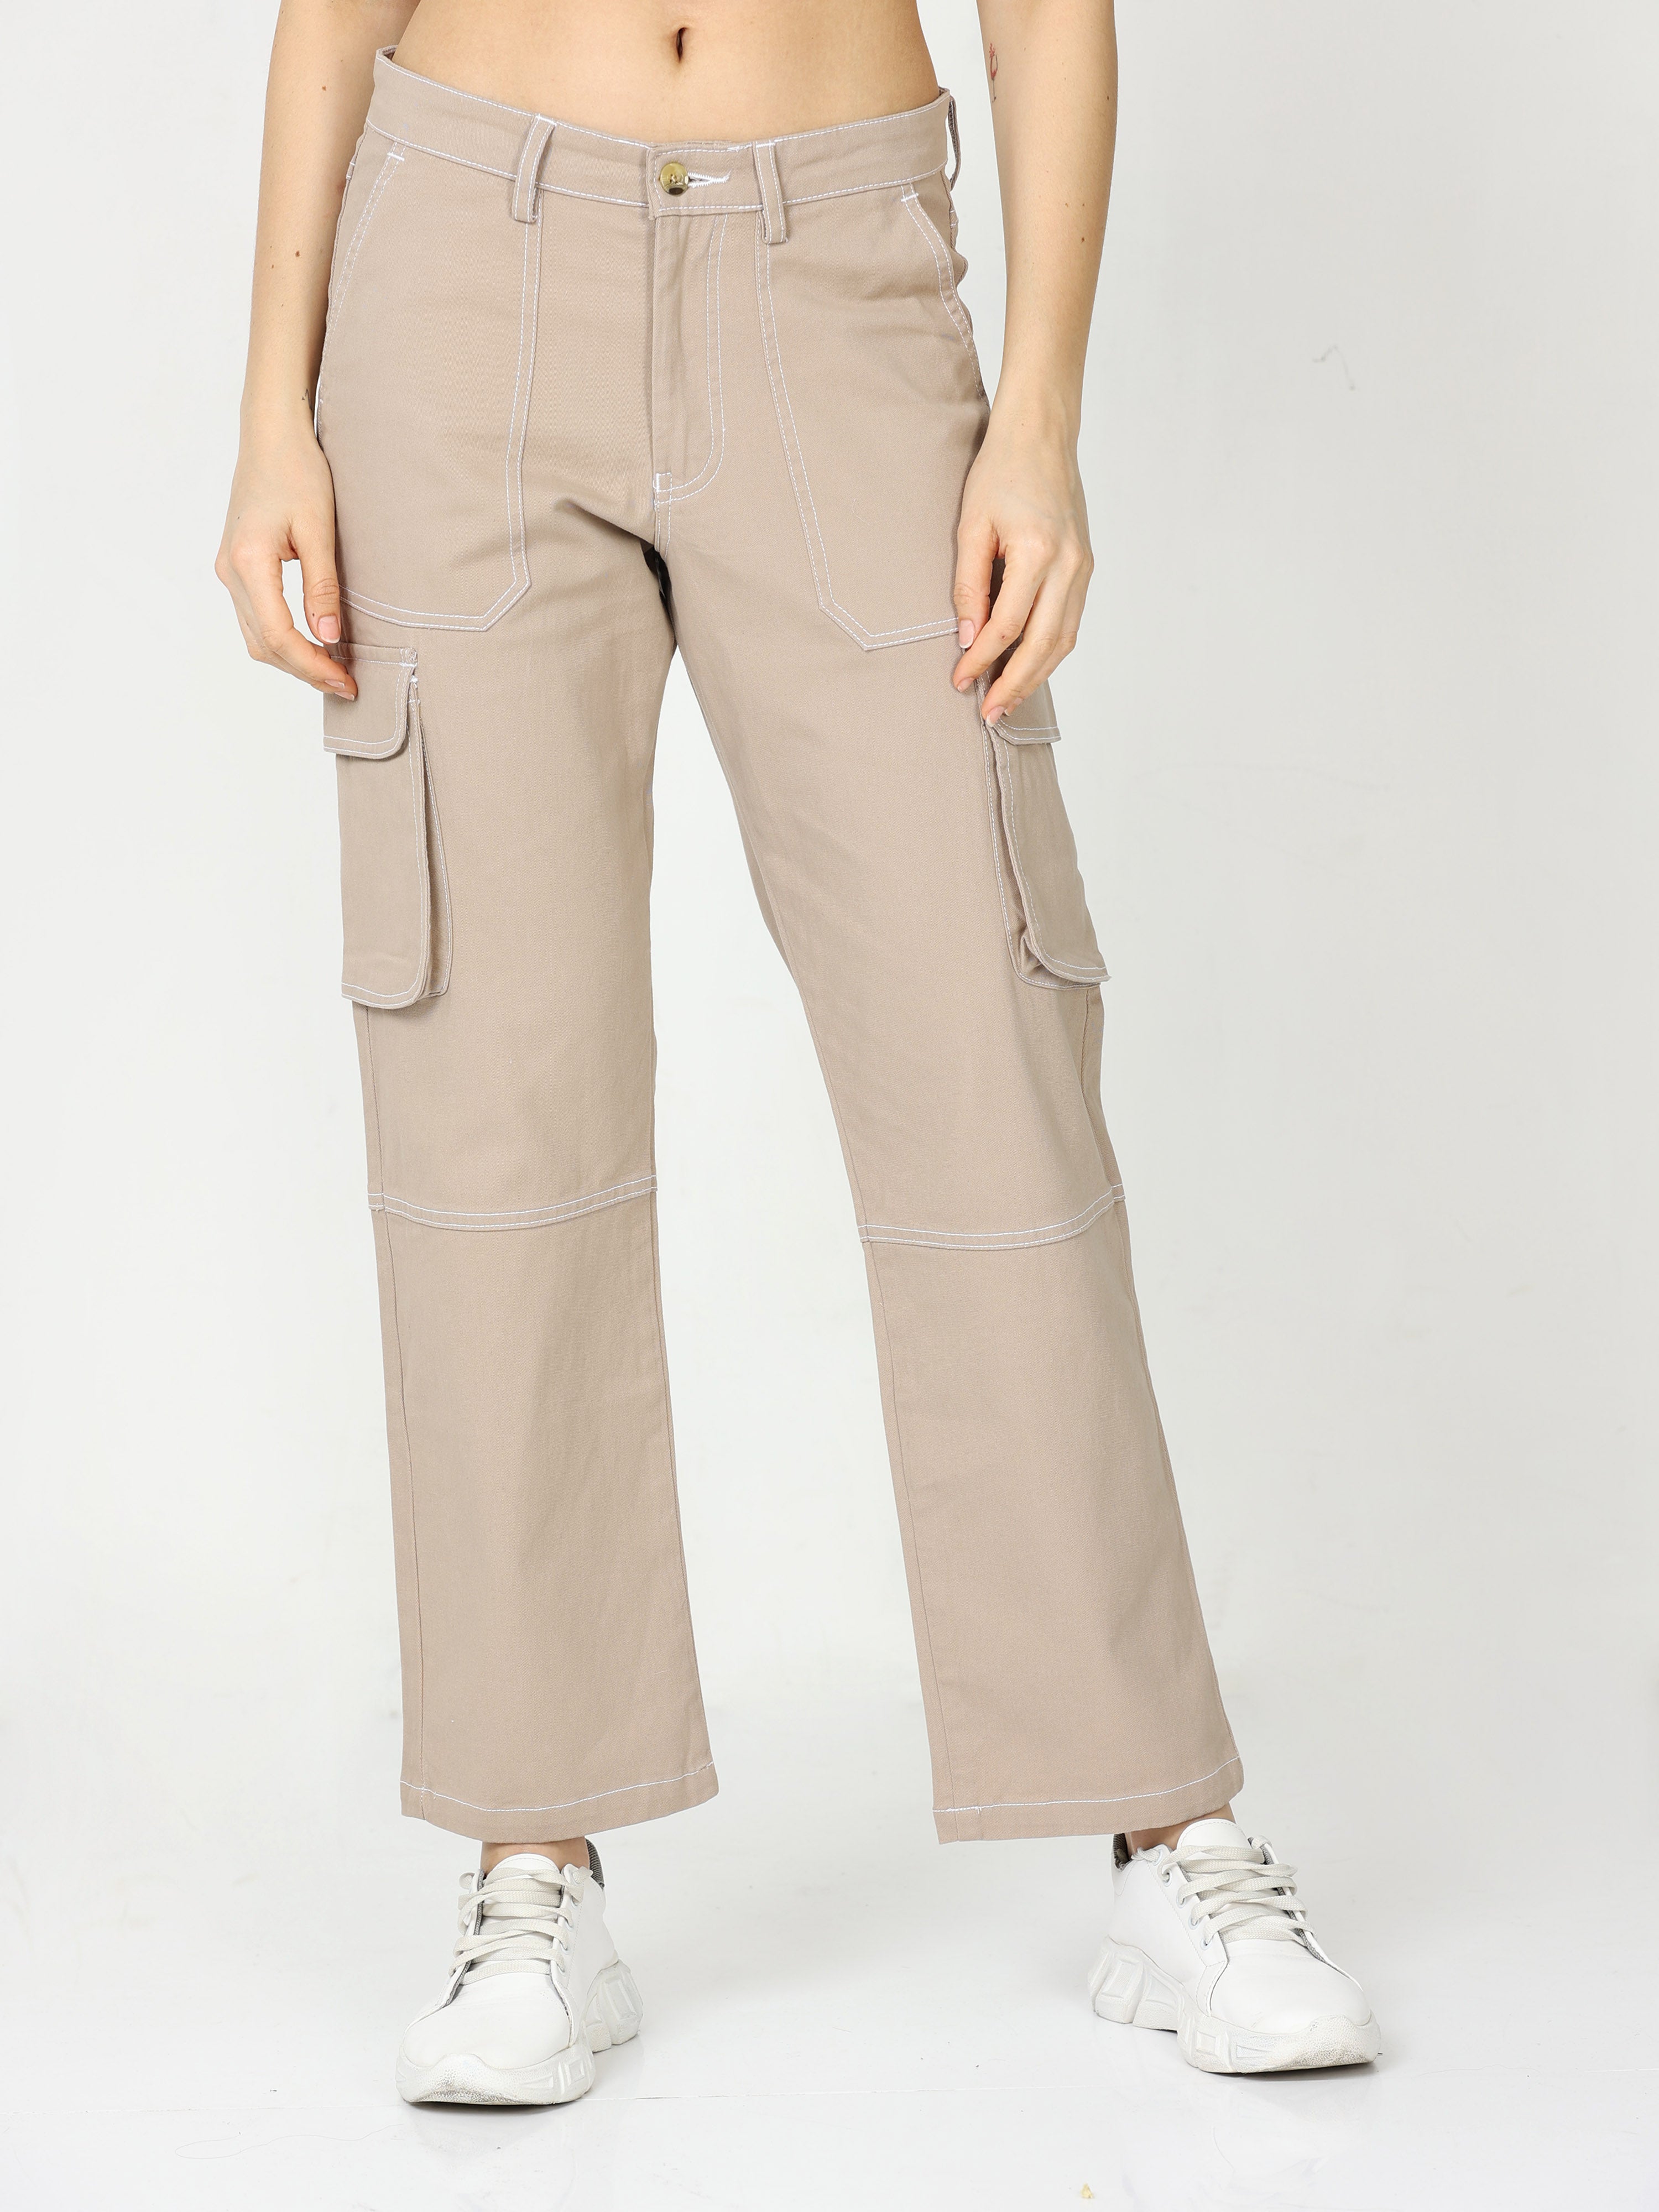 TIP-TOUN Six Pocket Pants for Boys -Boys Stylish Cargo Pants/Boys Jogger  Jeans | Comfortable